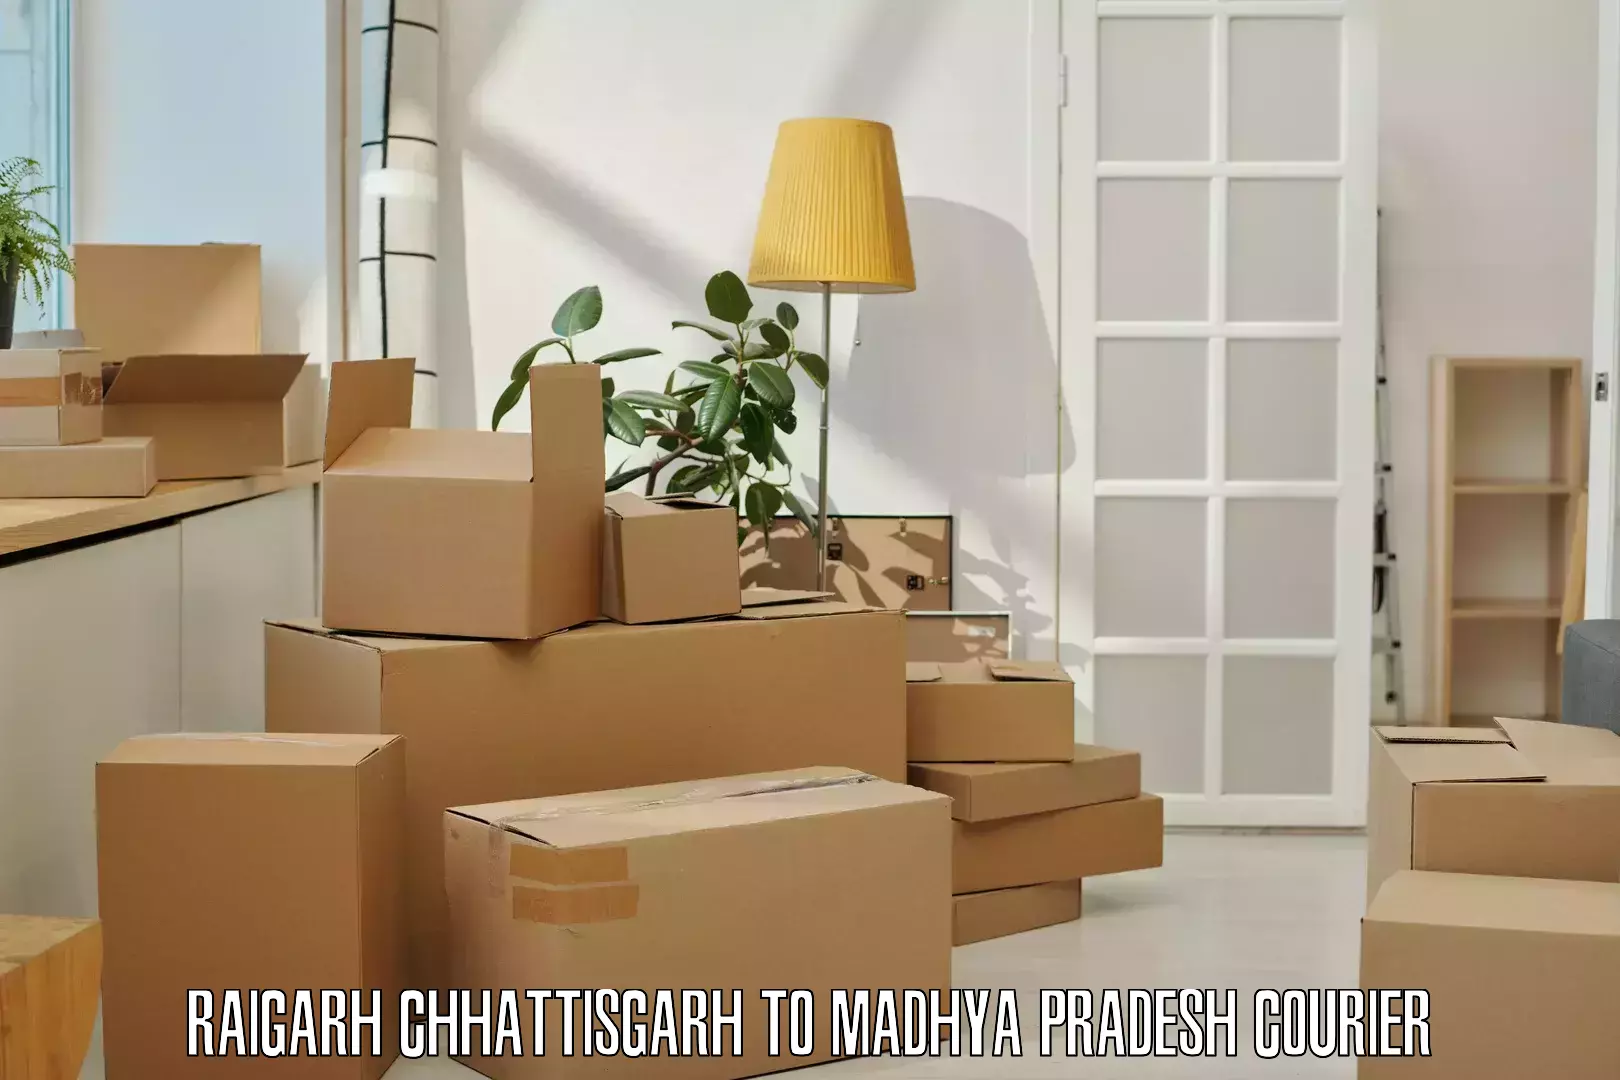 Courier service innovation Raigarh Chhattisgarh to Bargawan